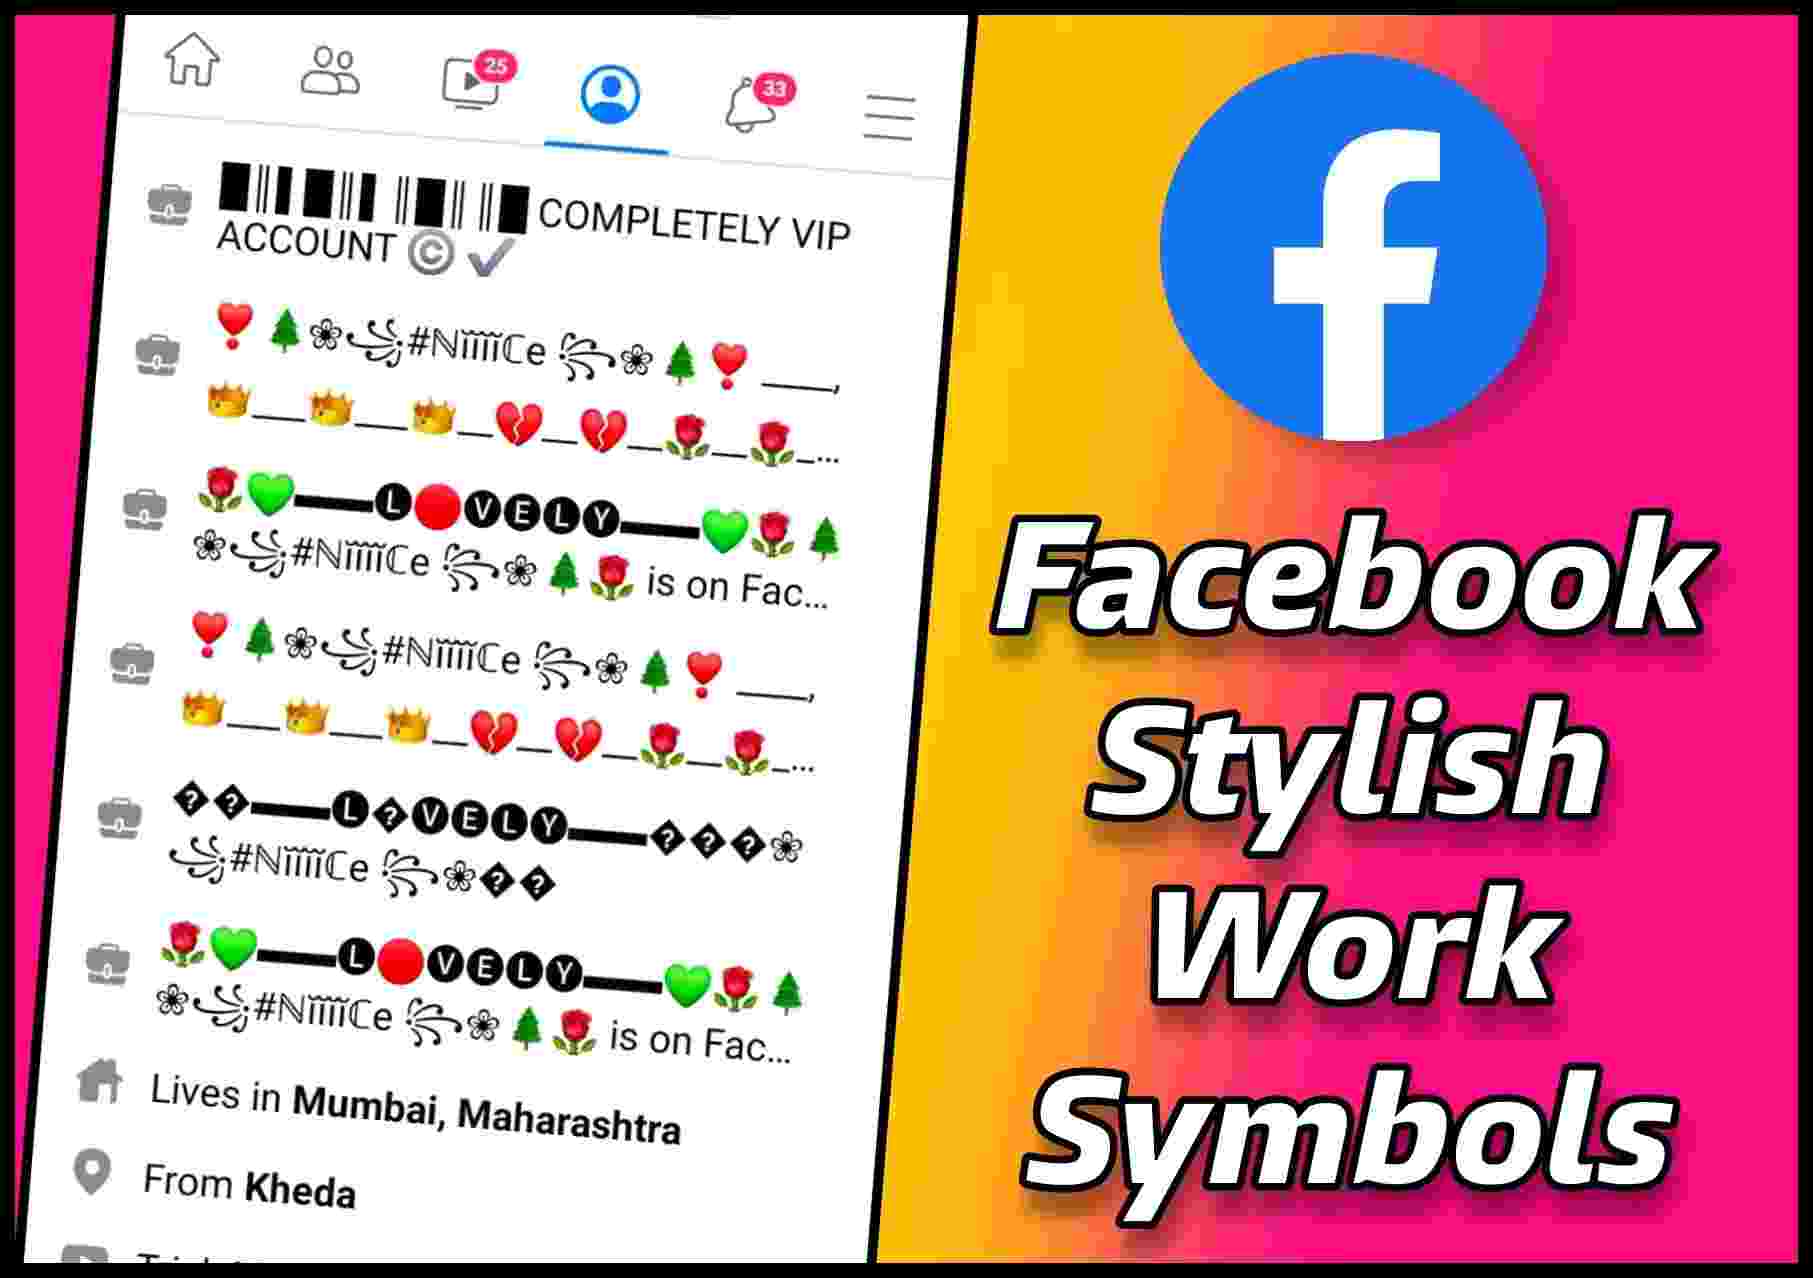 Stylish Work Symbols For Fb